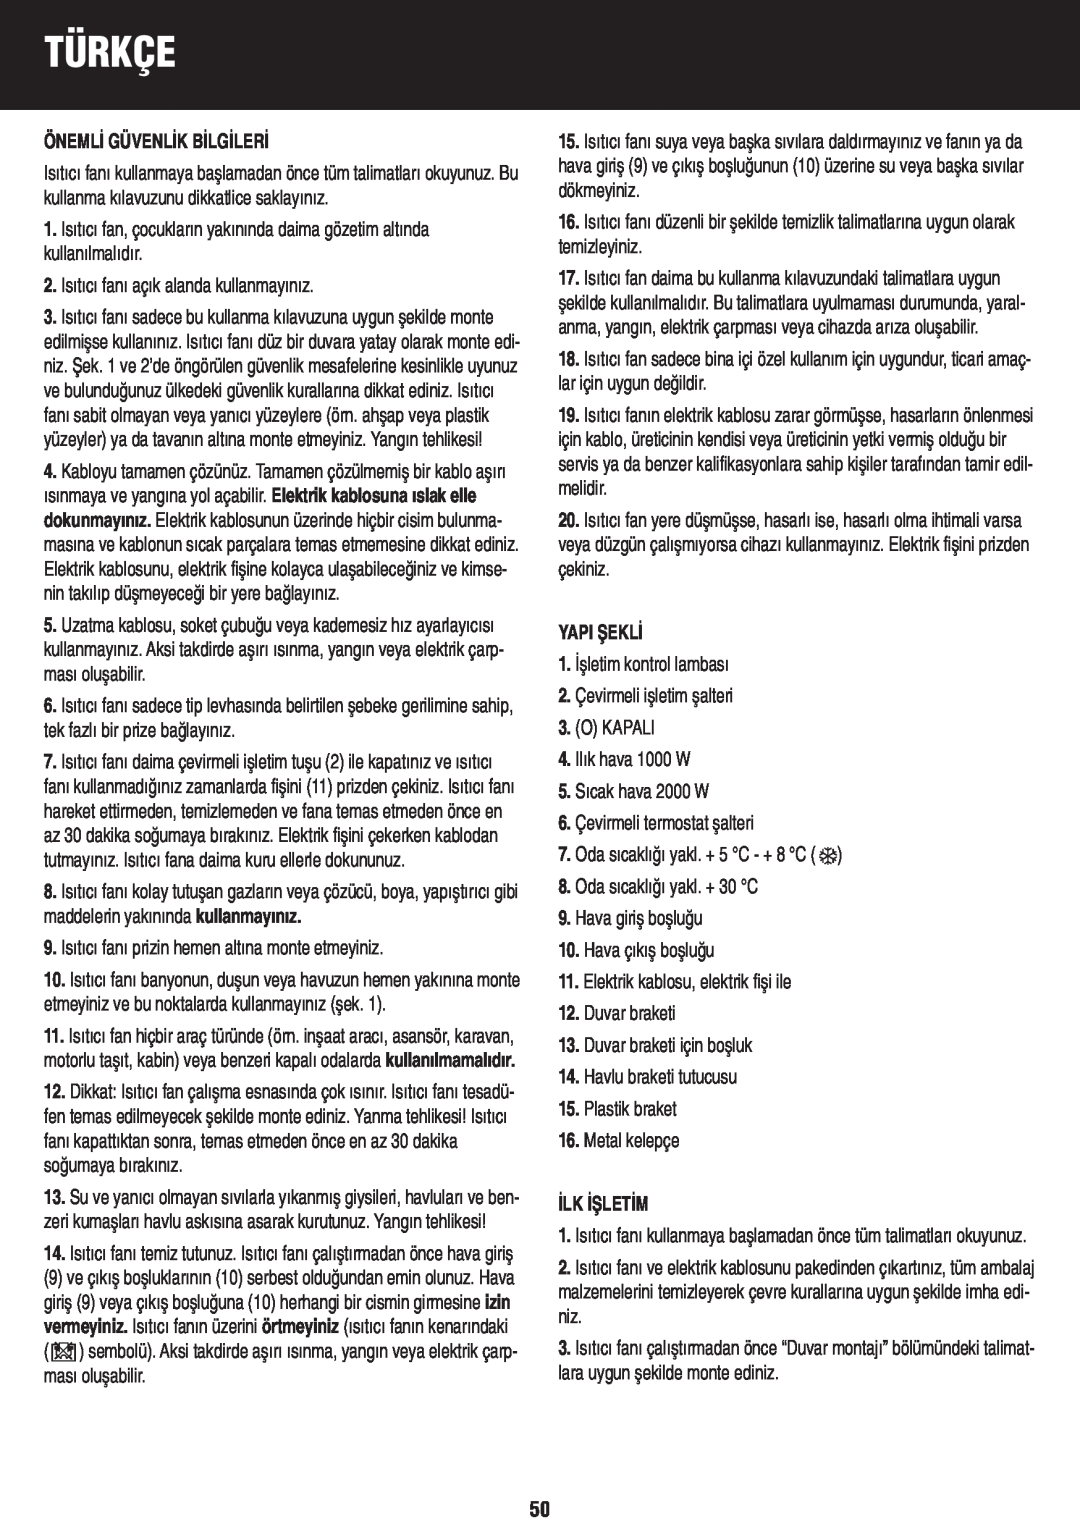 Honeywell BH-777FTE manual do utilizador Türkçe, Öneml‹ Güvenl‹K B‹Lg‹Ler‹, YAPI ﬁEKL‹, ‹LK ‹ﬁLET‹M 